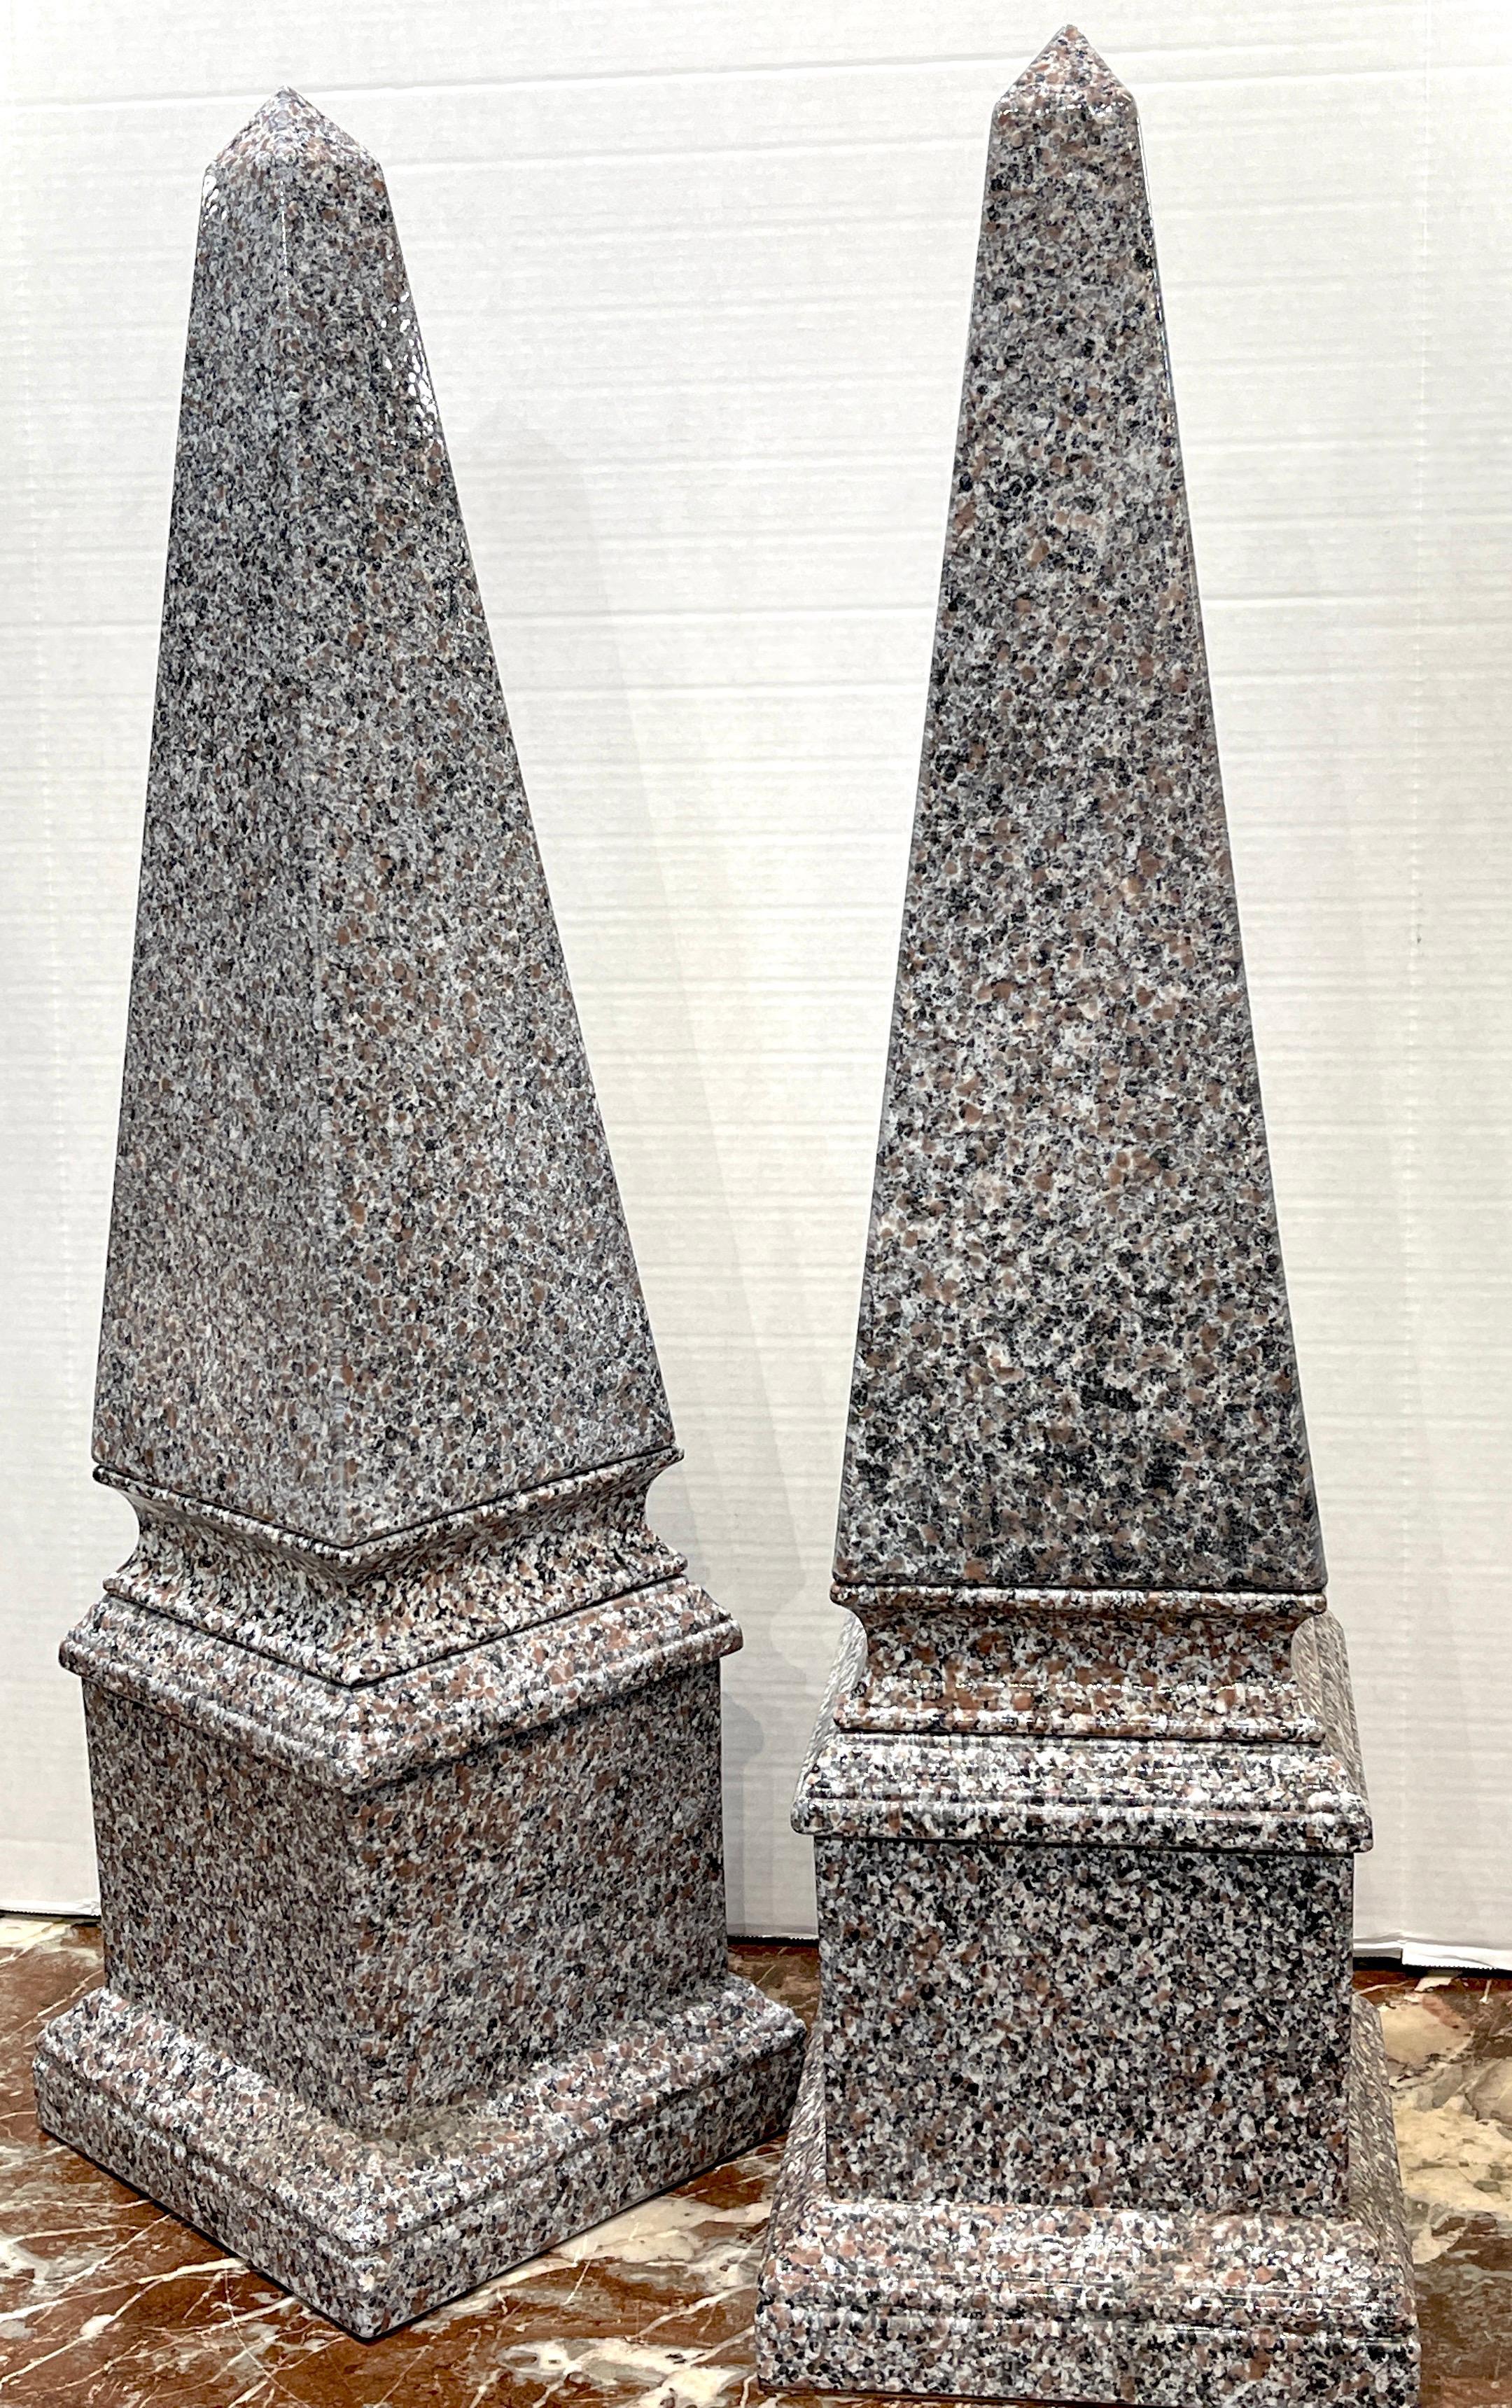 20th Century Large Pair of Italian Aptware/Mixed Earth Obelisks